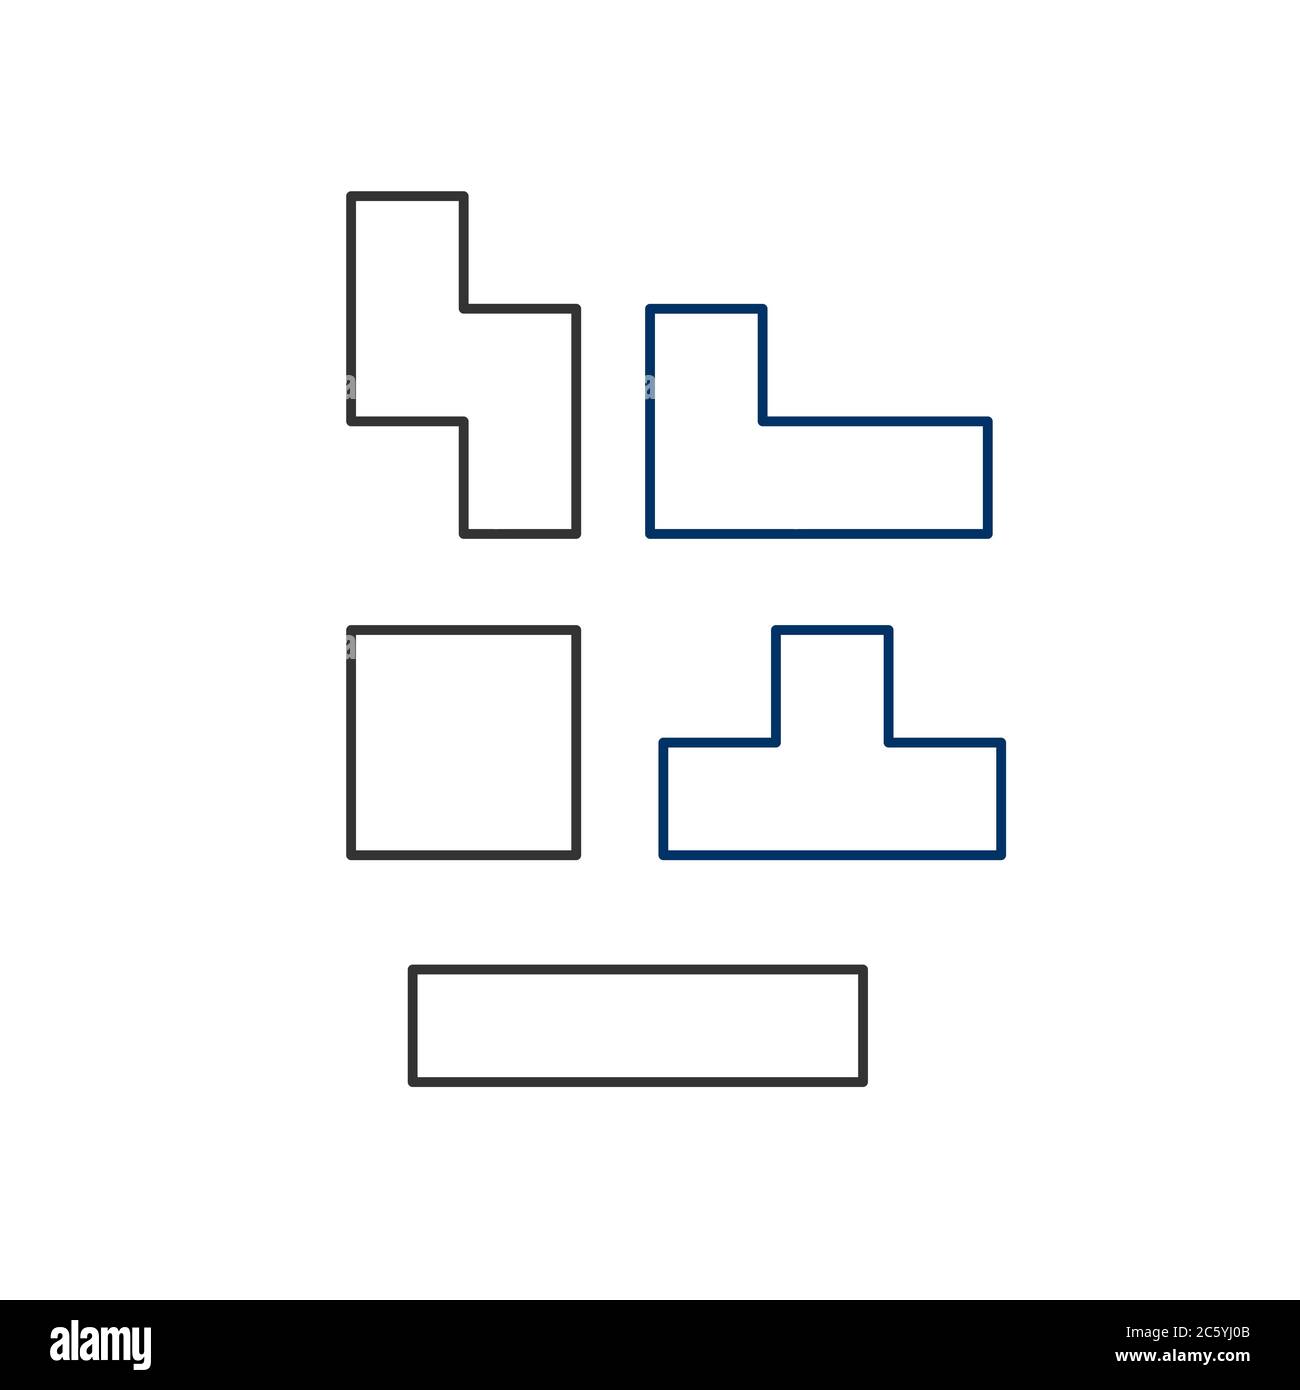 Outline tetris bricks or shapes. Stock vector illustration isolated on white background. Stock Vector